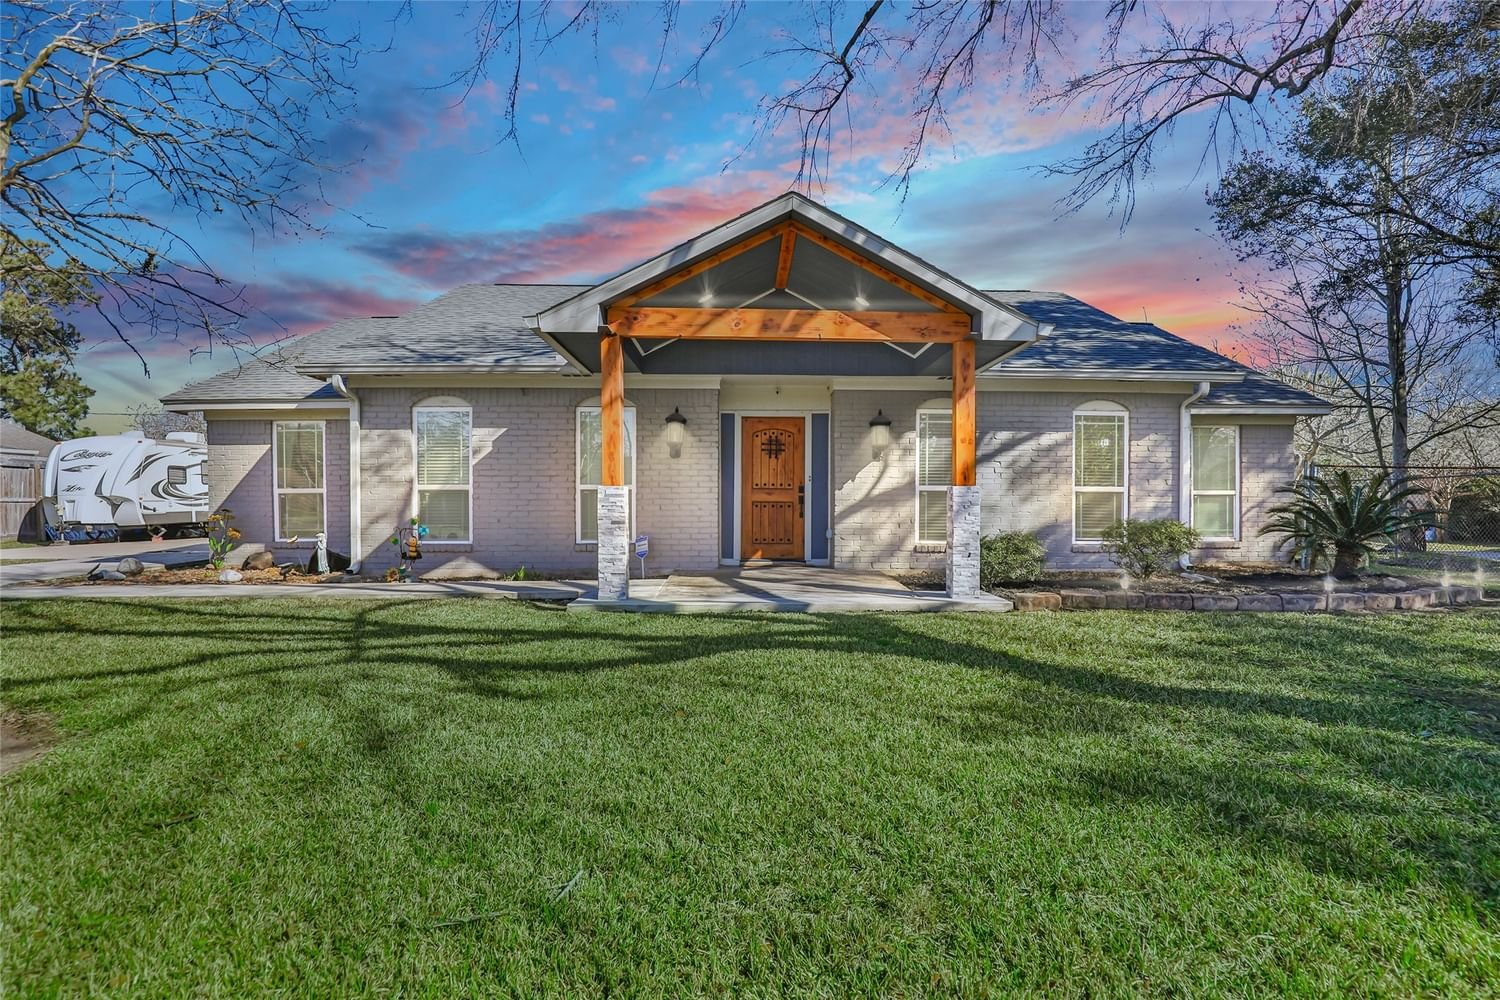 Real estate property located at 315 Circle, Chambers, Julie Ann Villa Sec 01, Baytown, TX, US